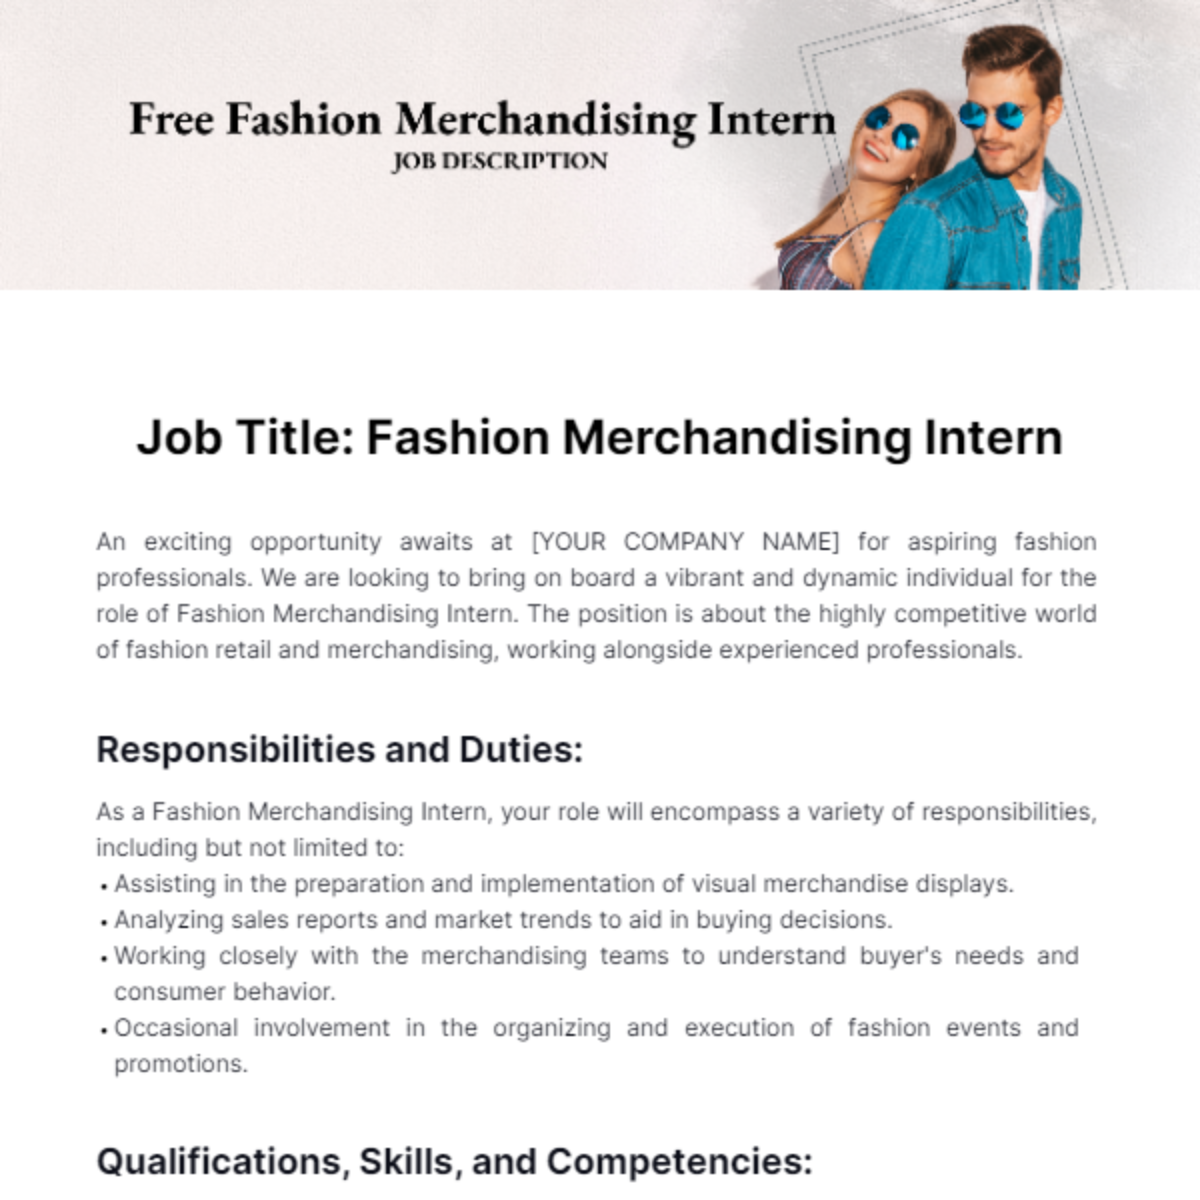 Free Fashion Merchandising Intern Job Description Template